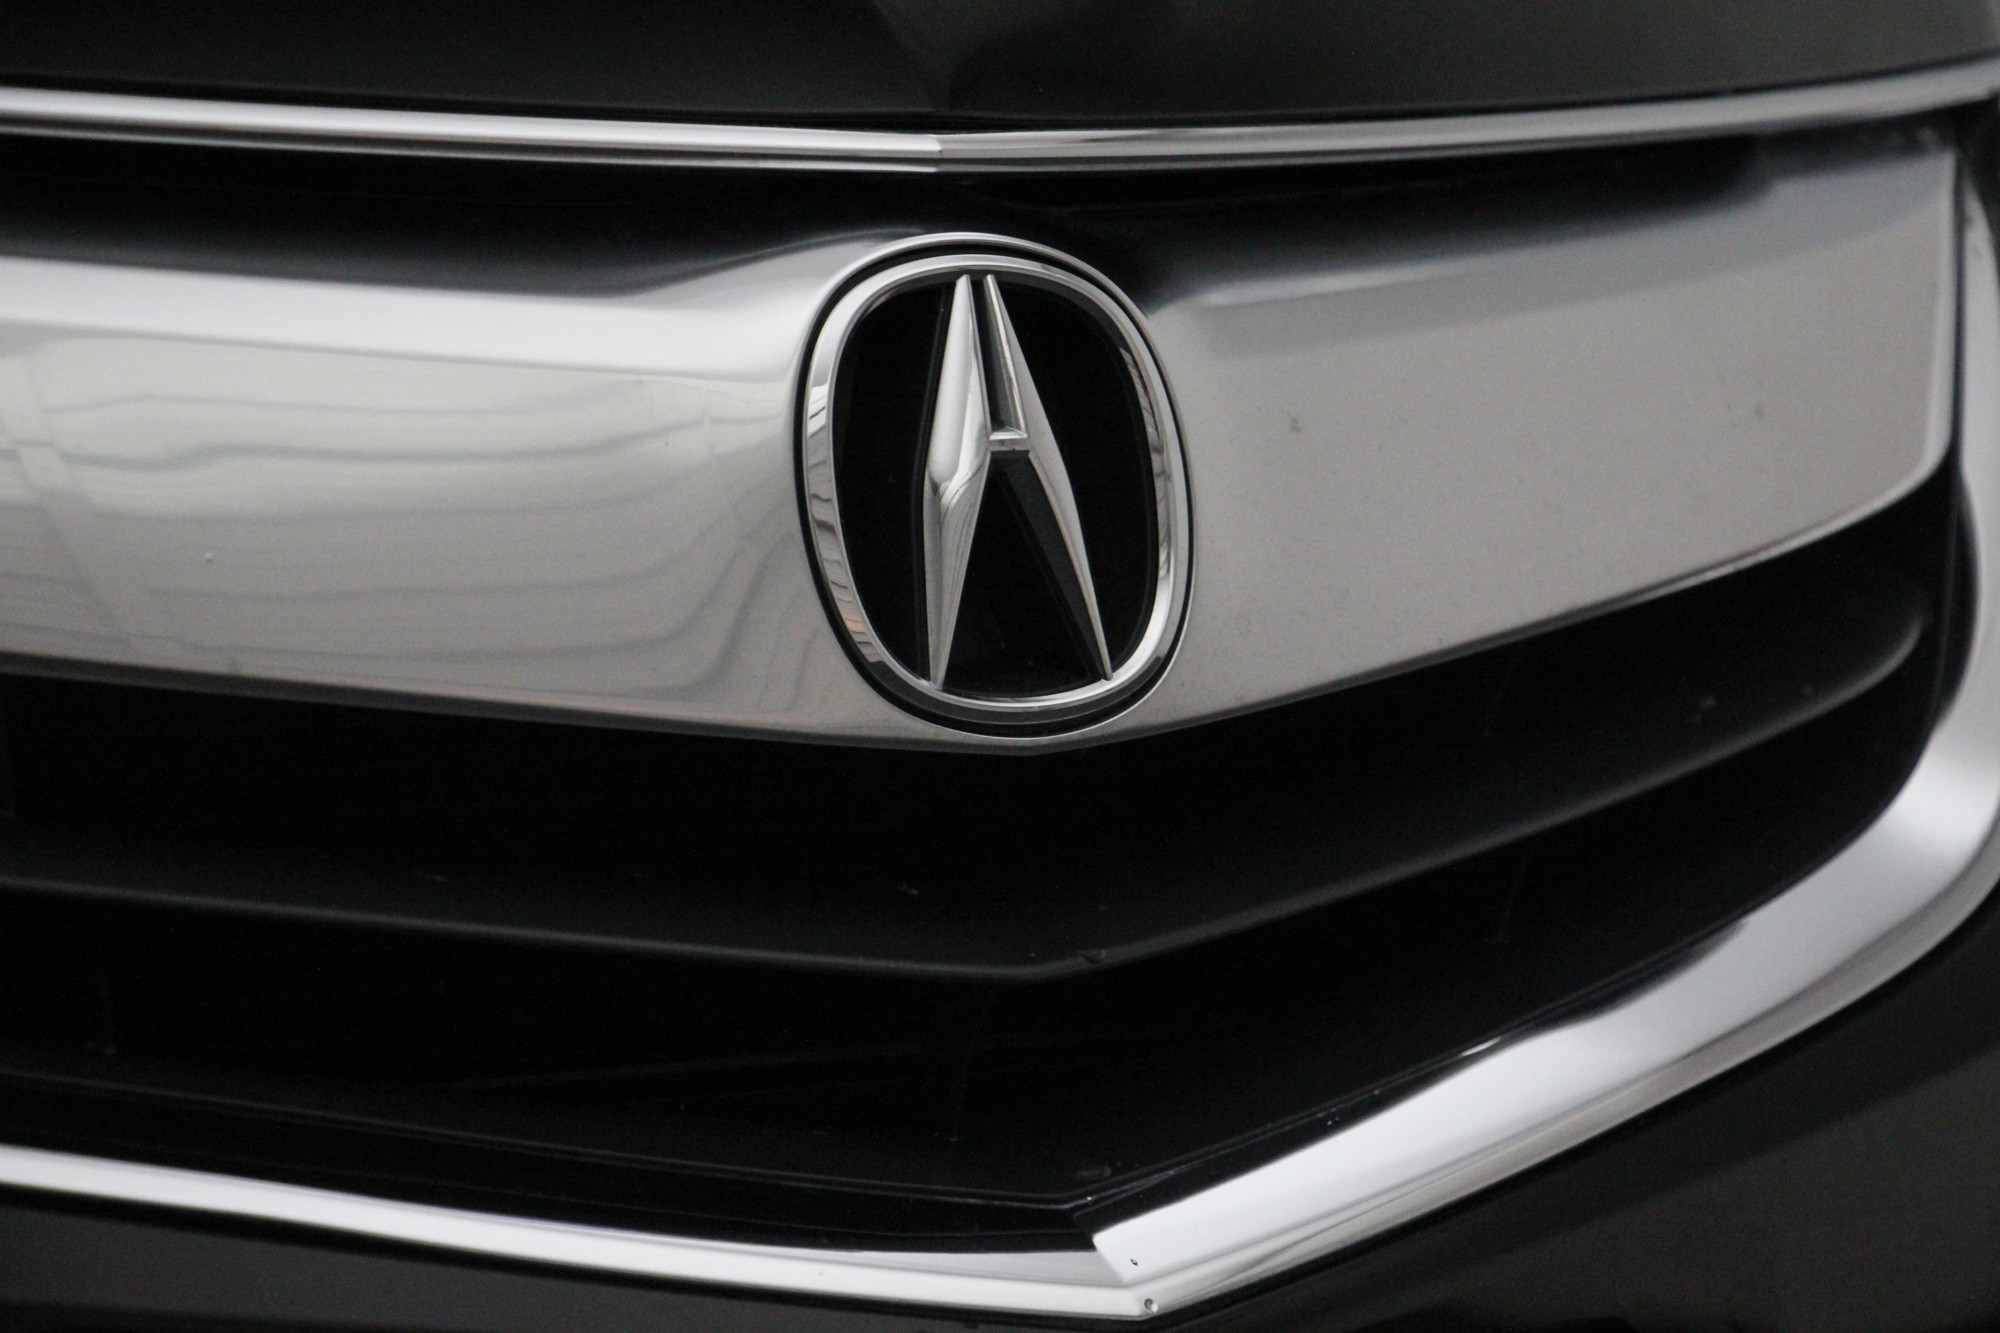 2000x1333 ... 2014-Acura-ILX-Logo-Emblem-Wallpaper-1 Home Page Car ...